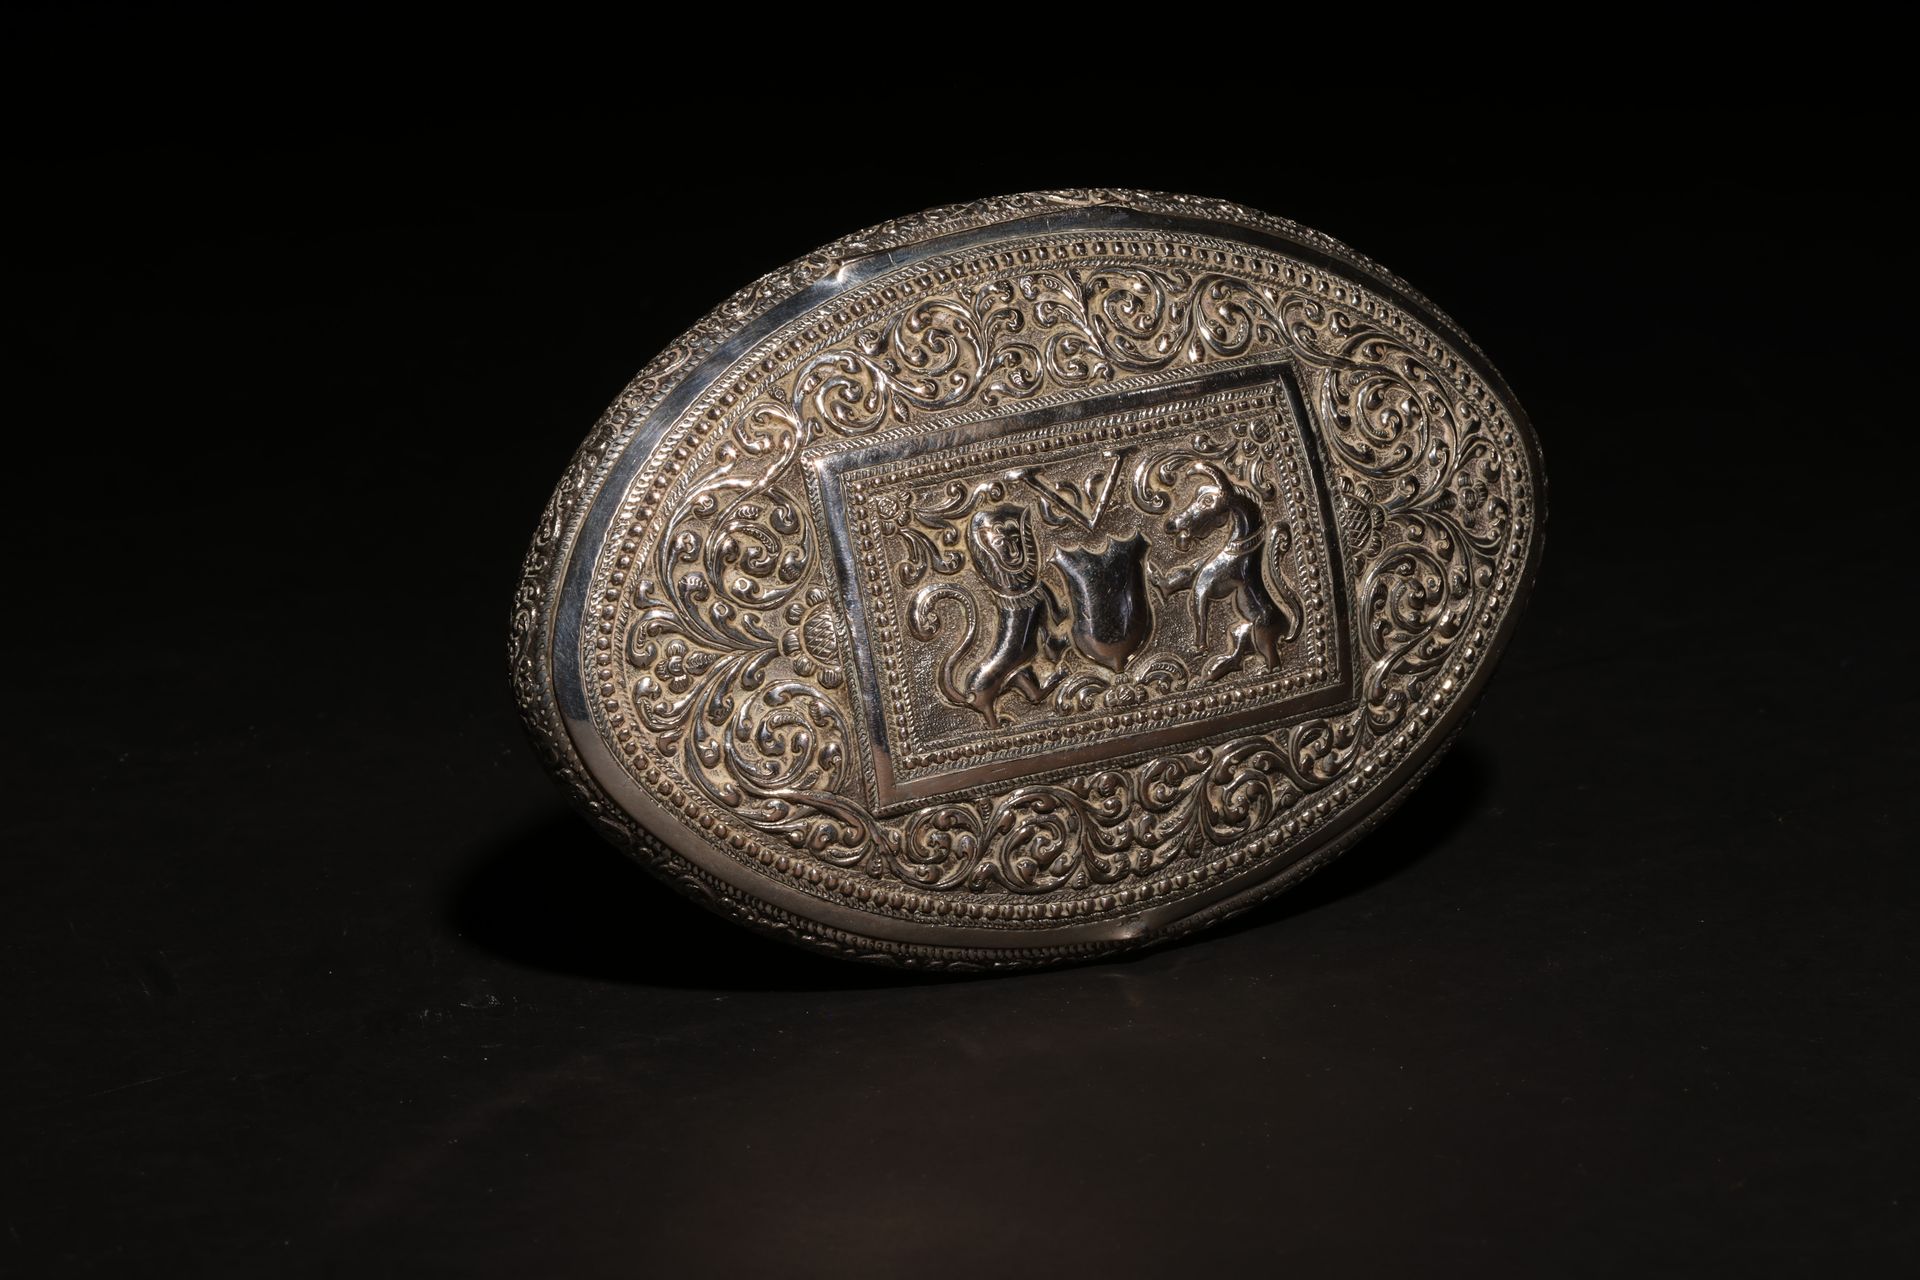 A Large Antique South Asian Ovoid Silver Casket Gran arca ovoide de plata del su&hellip;